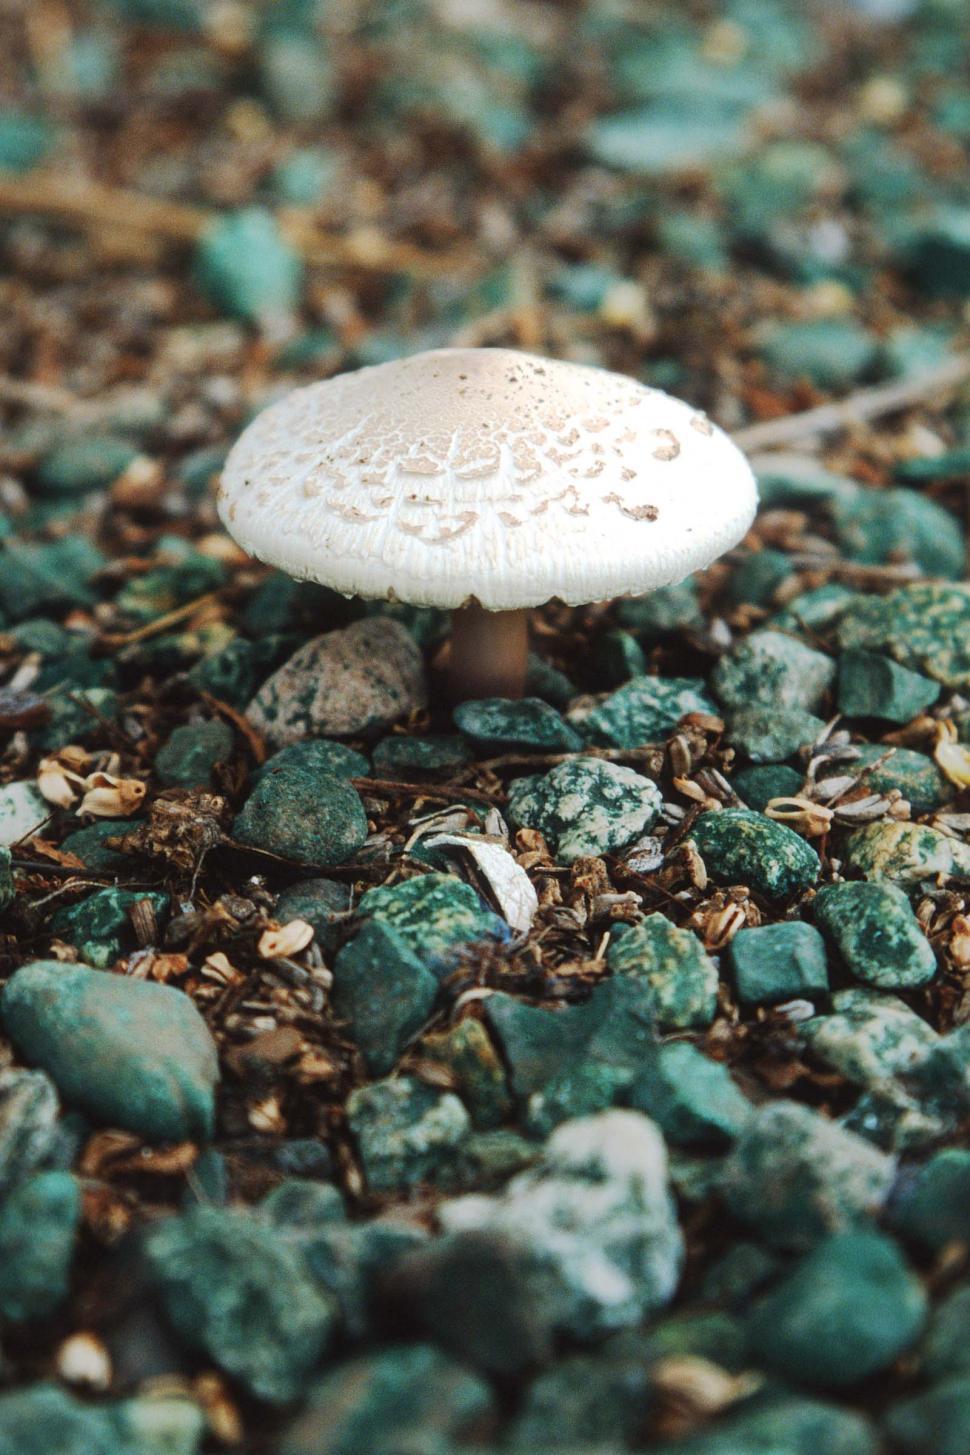 Free Image of Mushroom in green gravel 